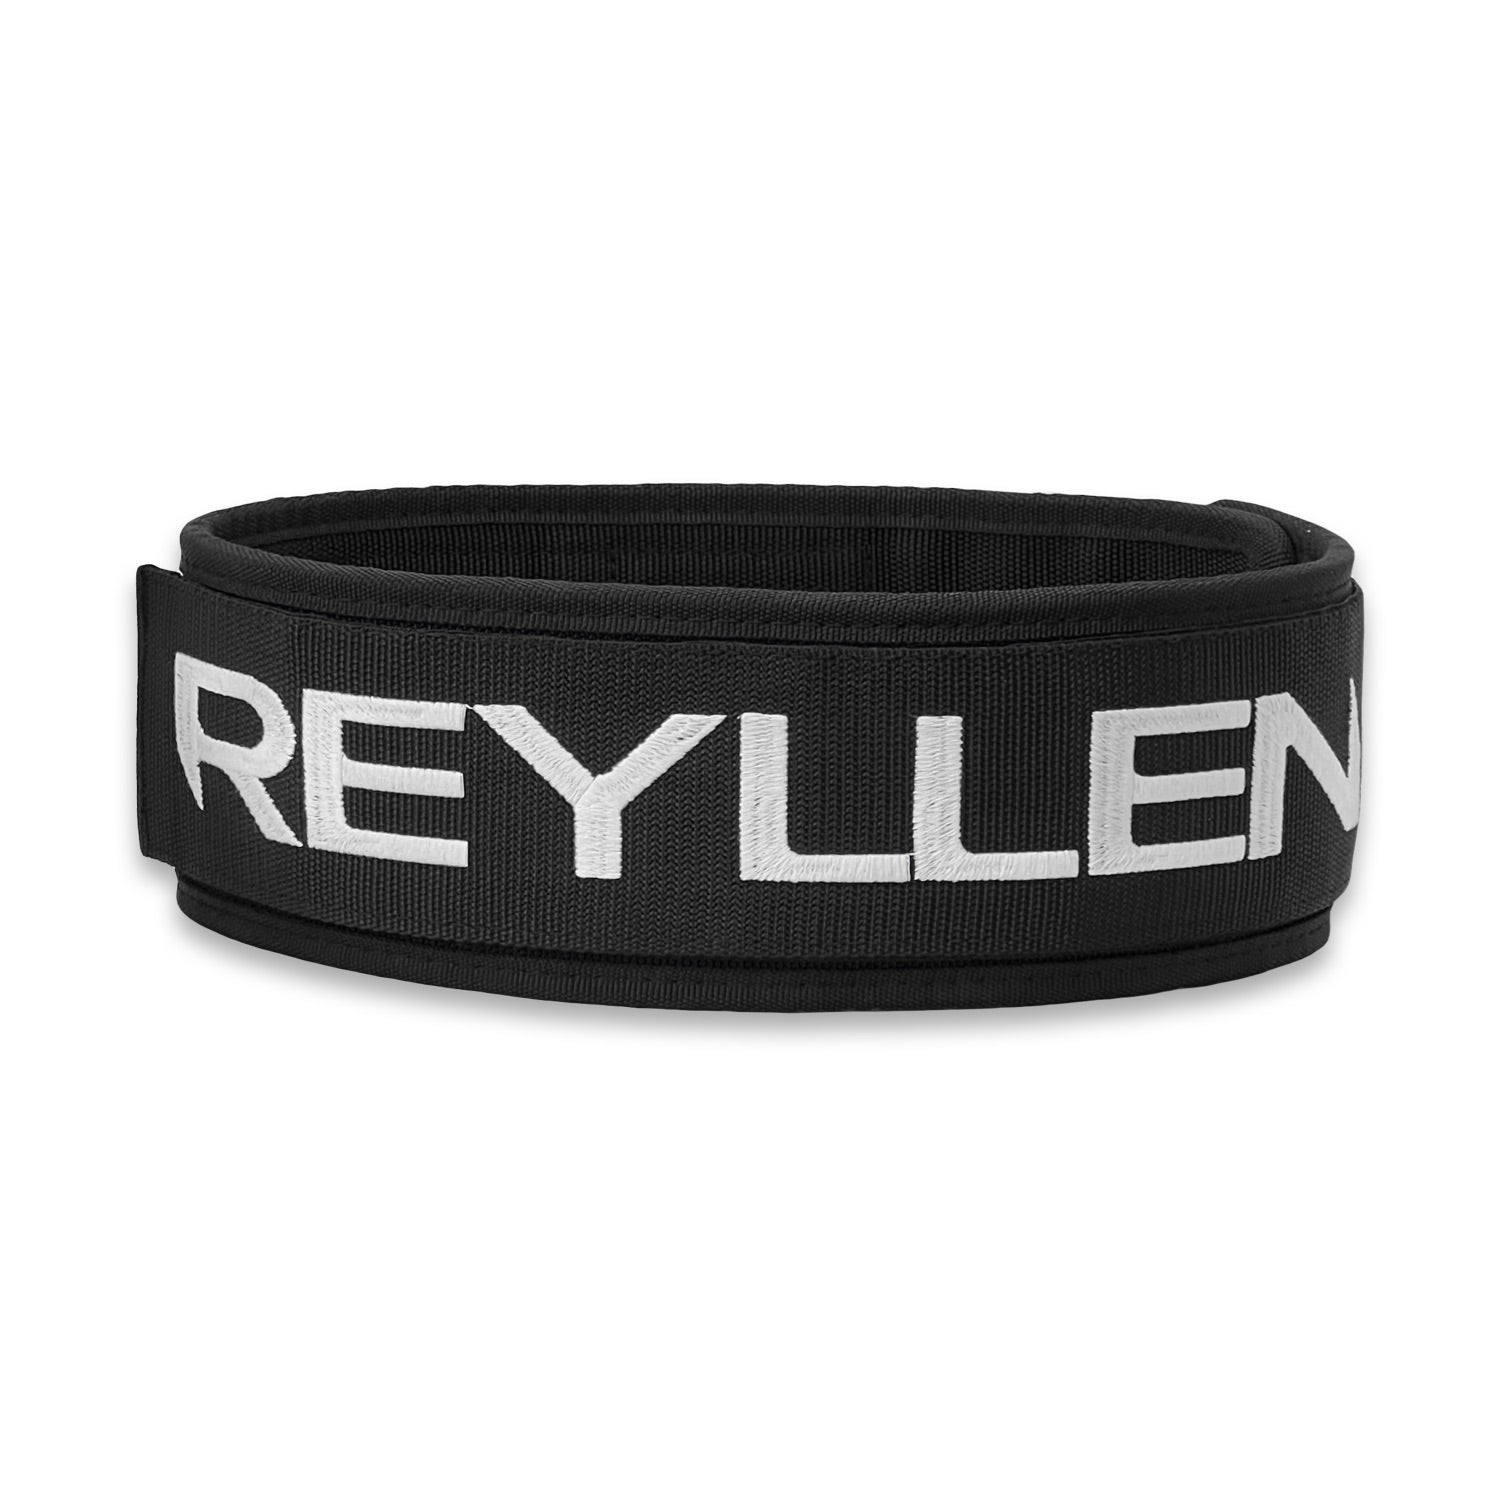 Reyllen GX Nylon 4&quot; Weigh Lifting Belt Black - logo on velcro strap view 